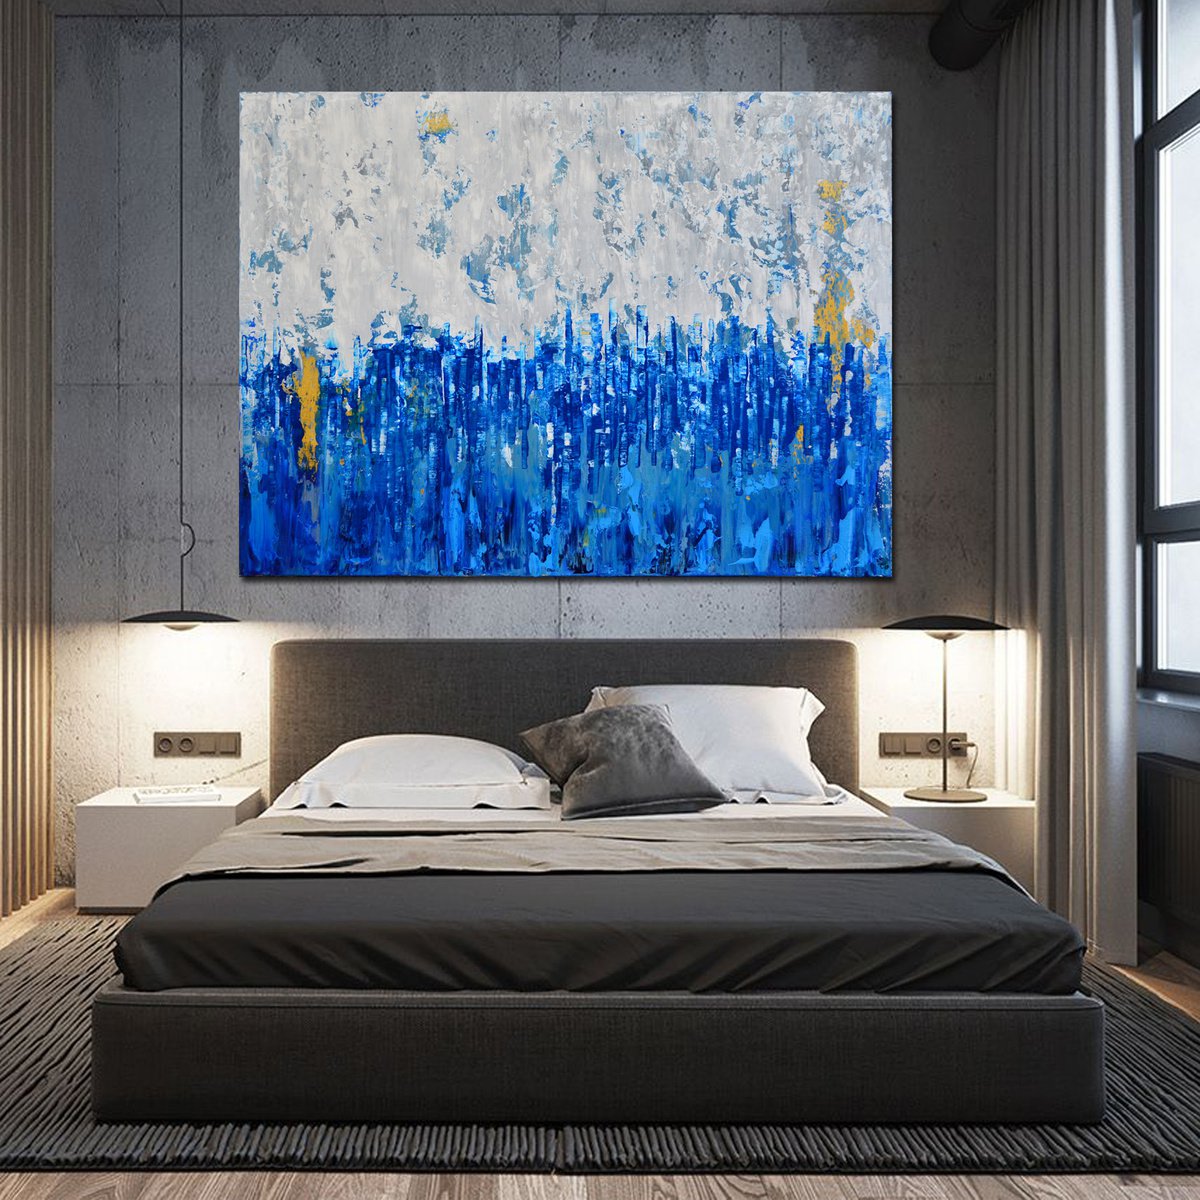 Abstract - Blue Noise 1 - Original Modern Abstract Painting Art on Large Canvas by Jakub DK - JAKUB D KRZEWNIAK